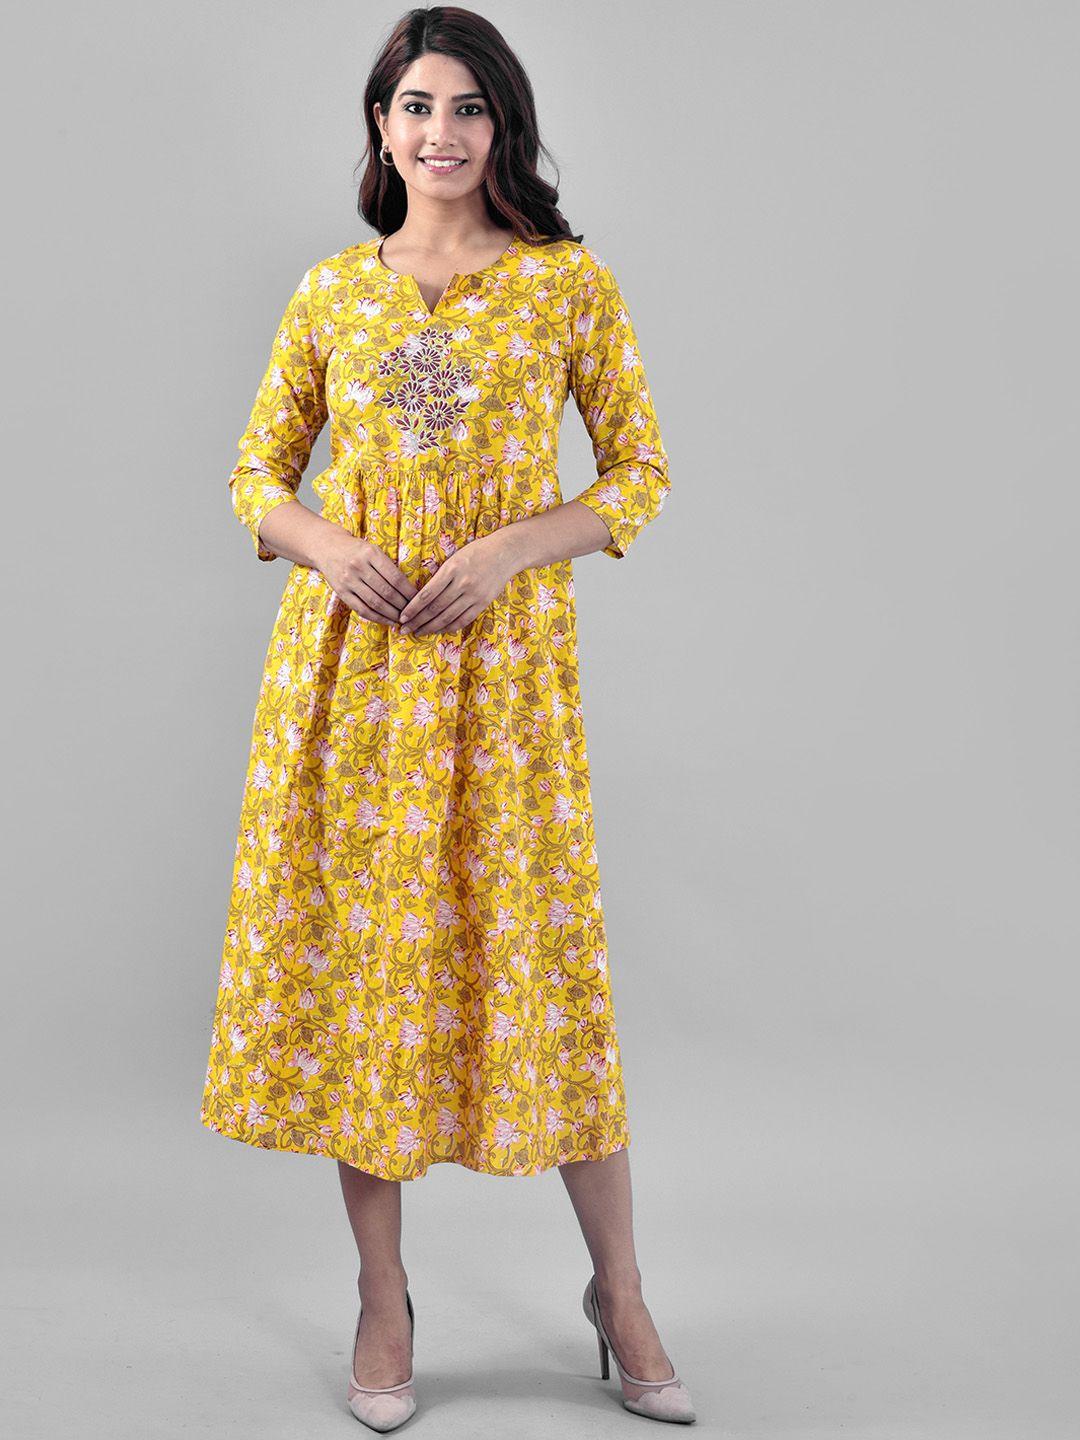 kalini floral printed ethnic dress